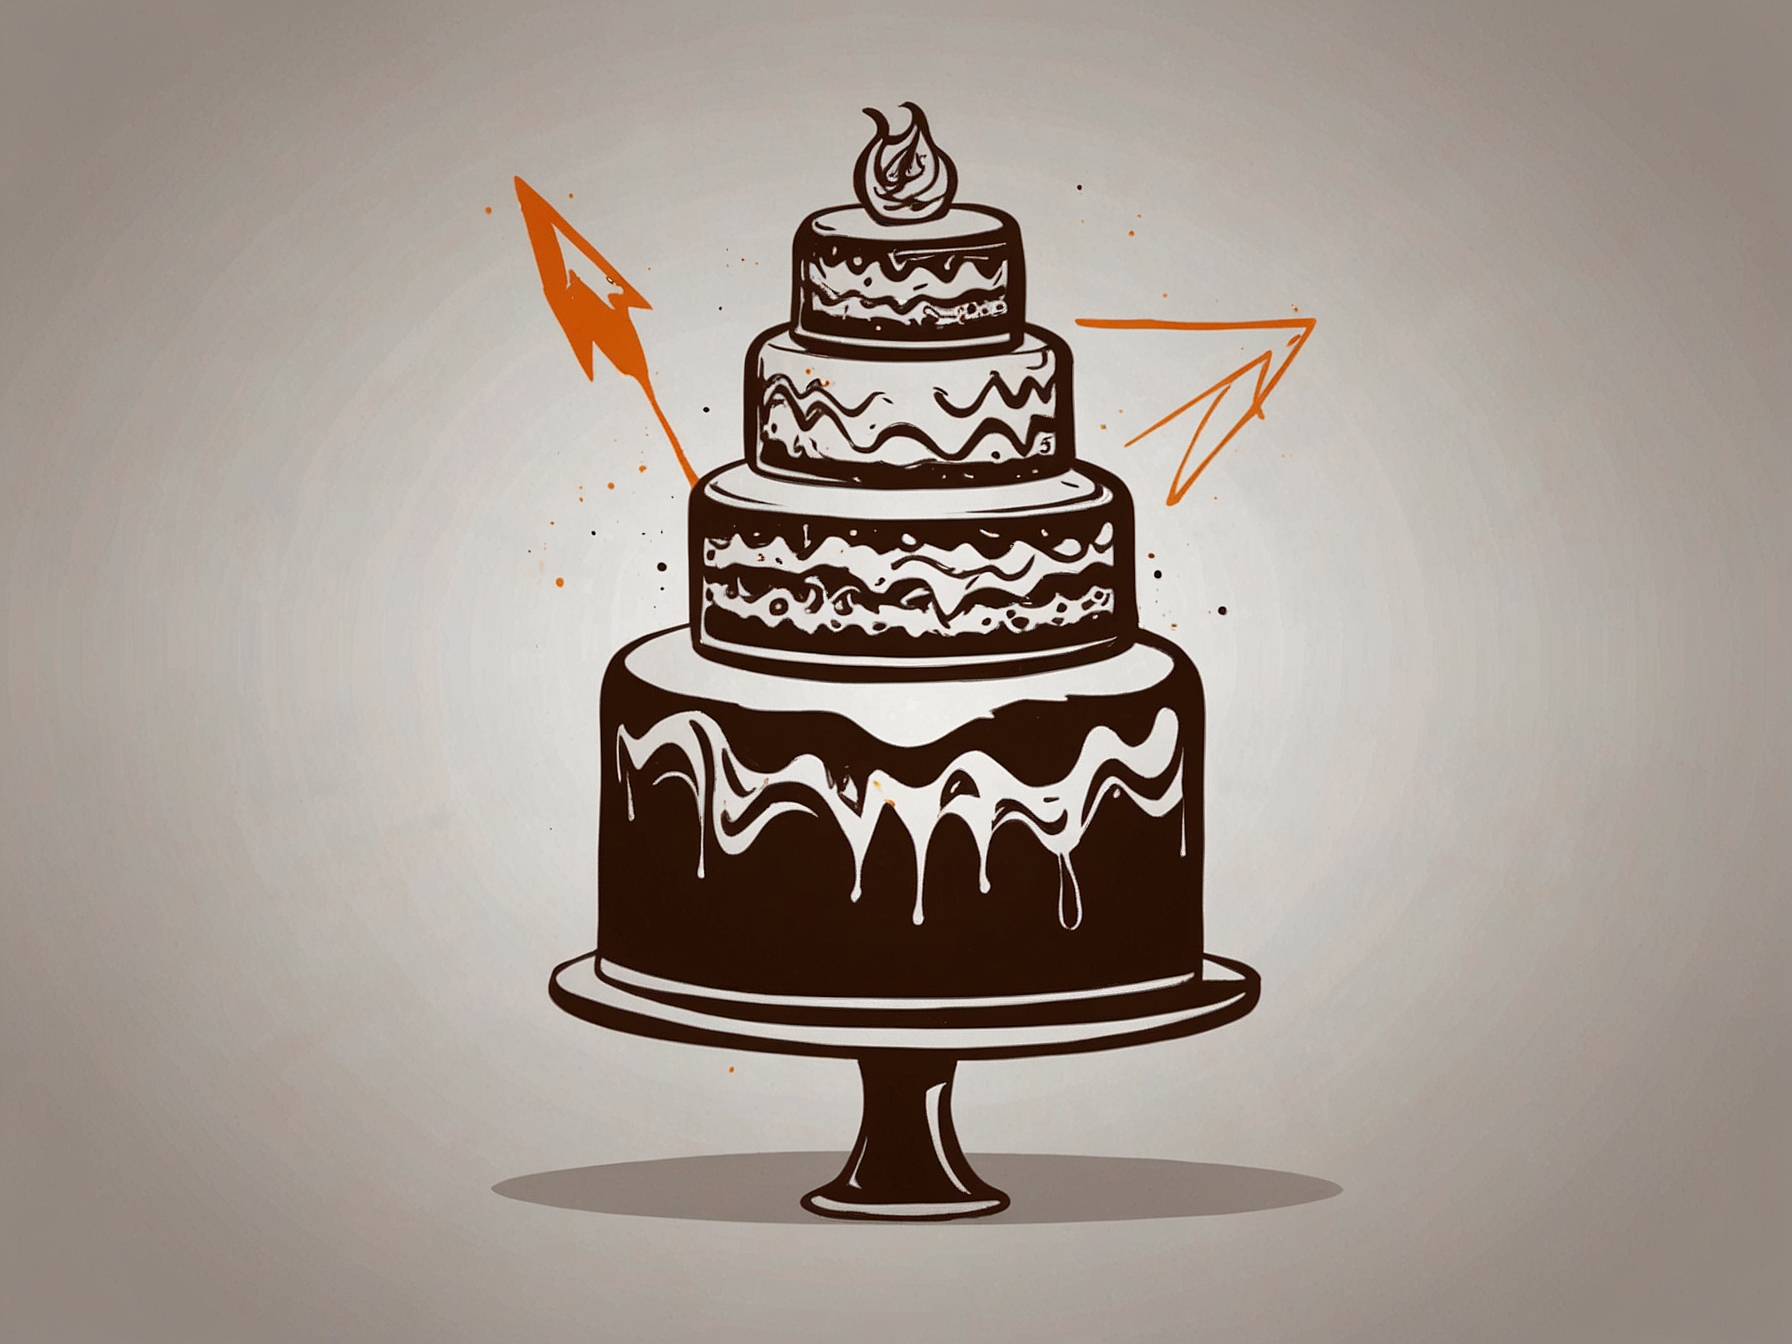 Image of CAKE stock symbol with upward trend arrow